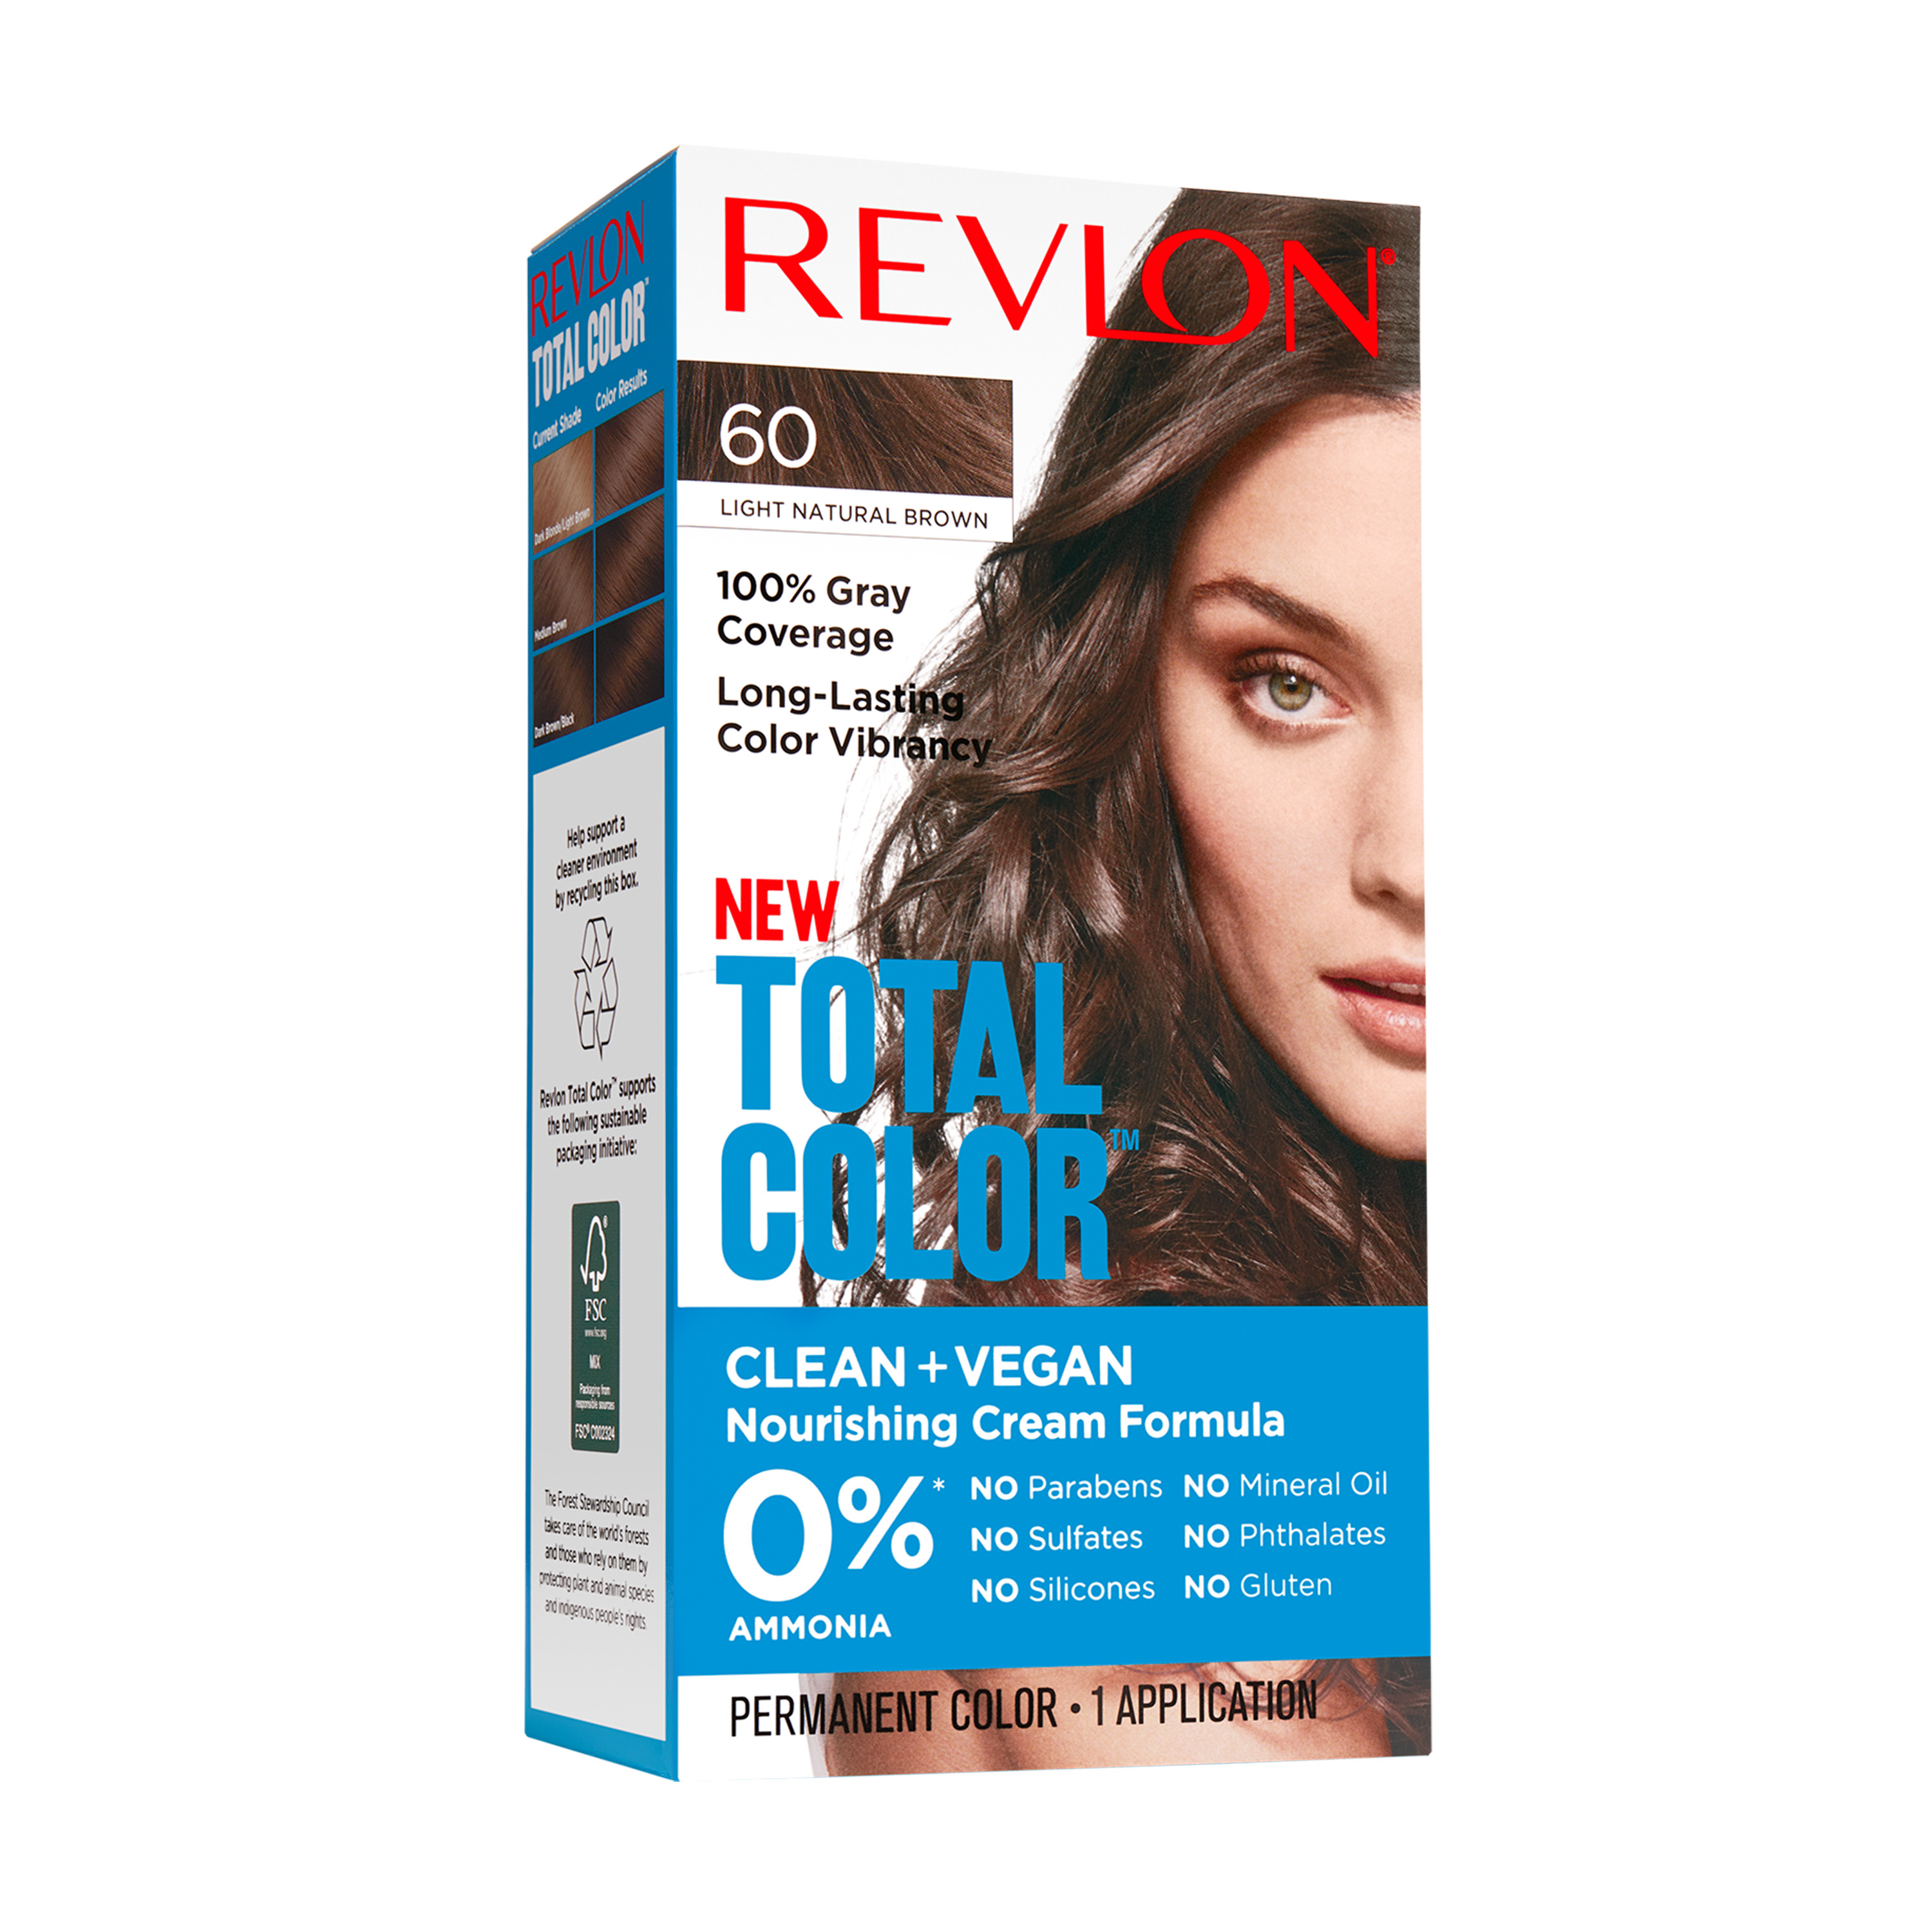 Revlon Permanent Hair Color by Revlon, Permanent Hair Dye, Total Color with 100% Gray Coverage, Clean & Vegan, 60 Light Natural Brown, 3.5 Oz, 60 Light Natural Brown, 5.94 fl oz - image 1 of 16